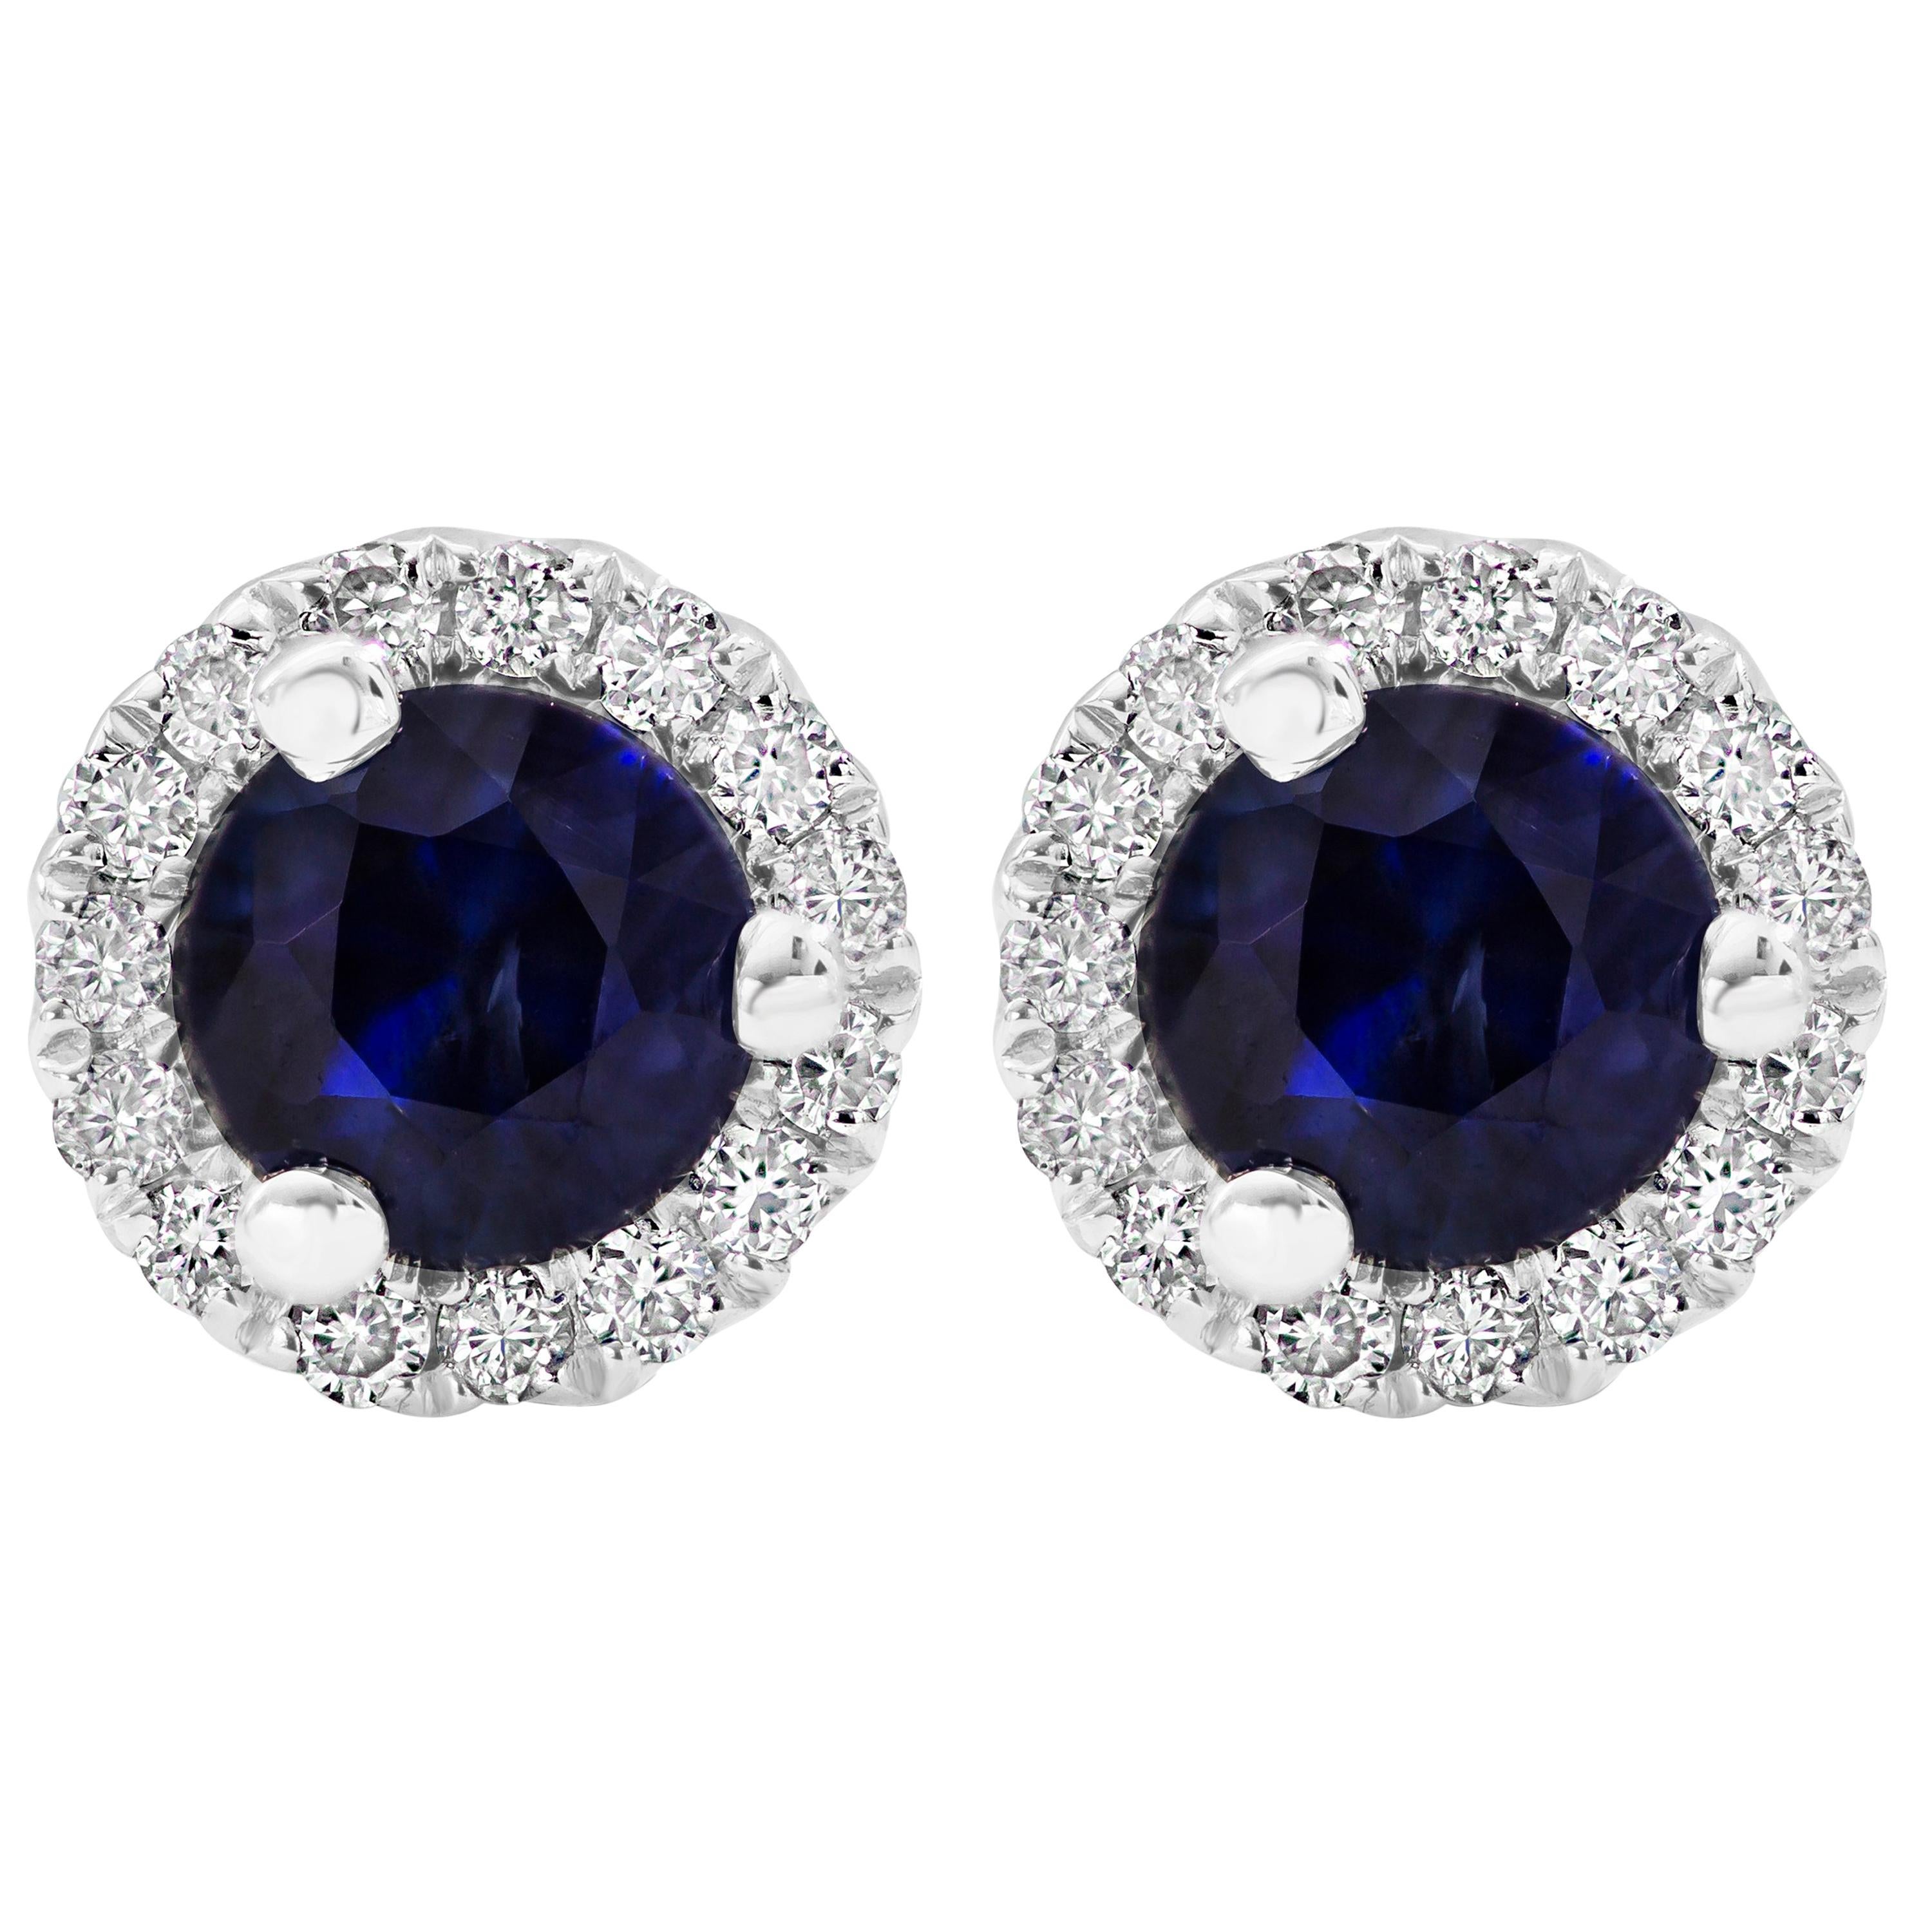 Blue Sapphire and Diamond Halo Stud Earrings